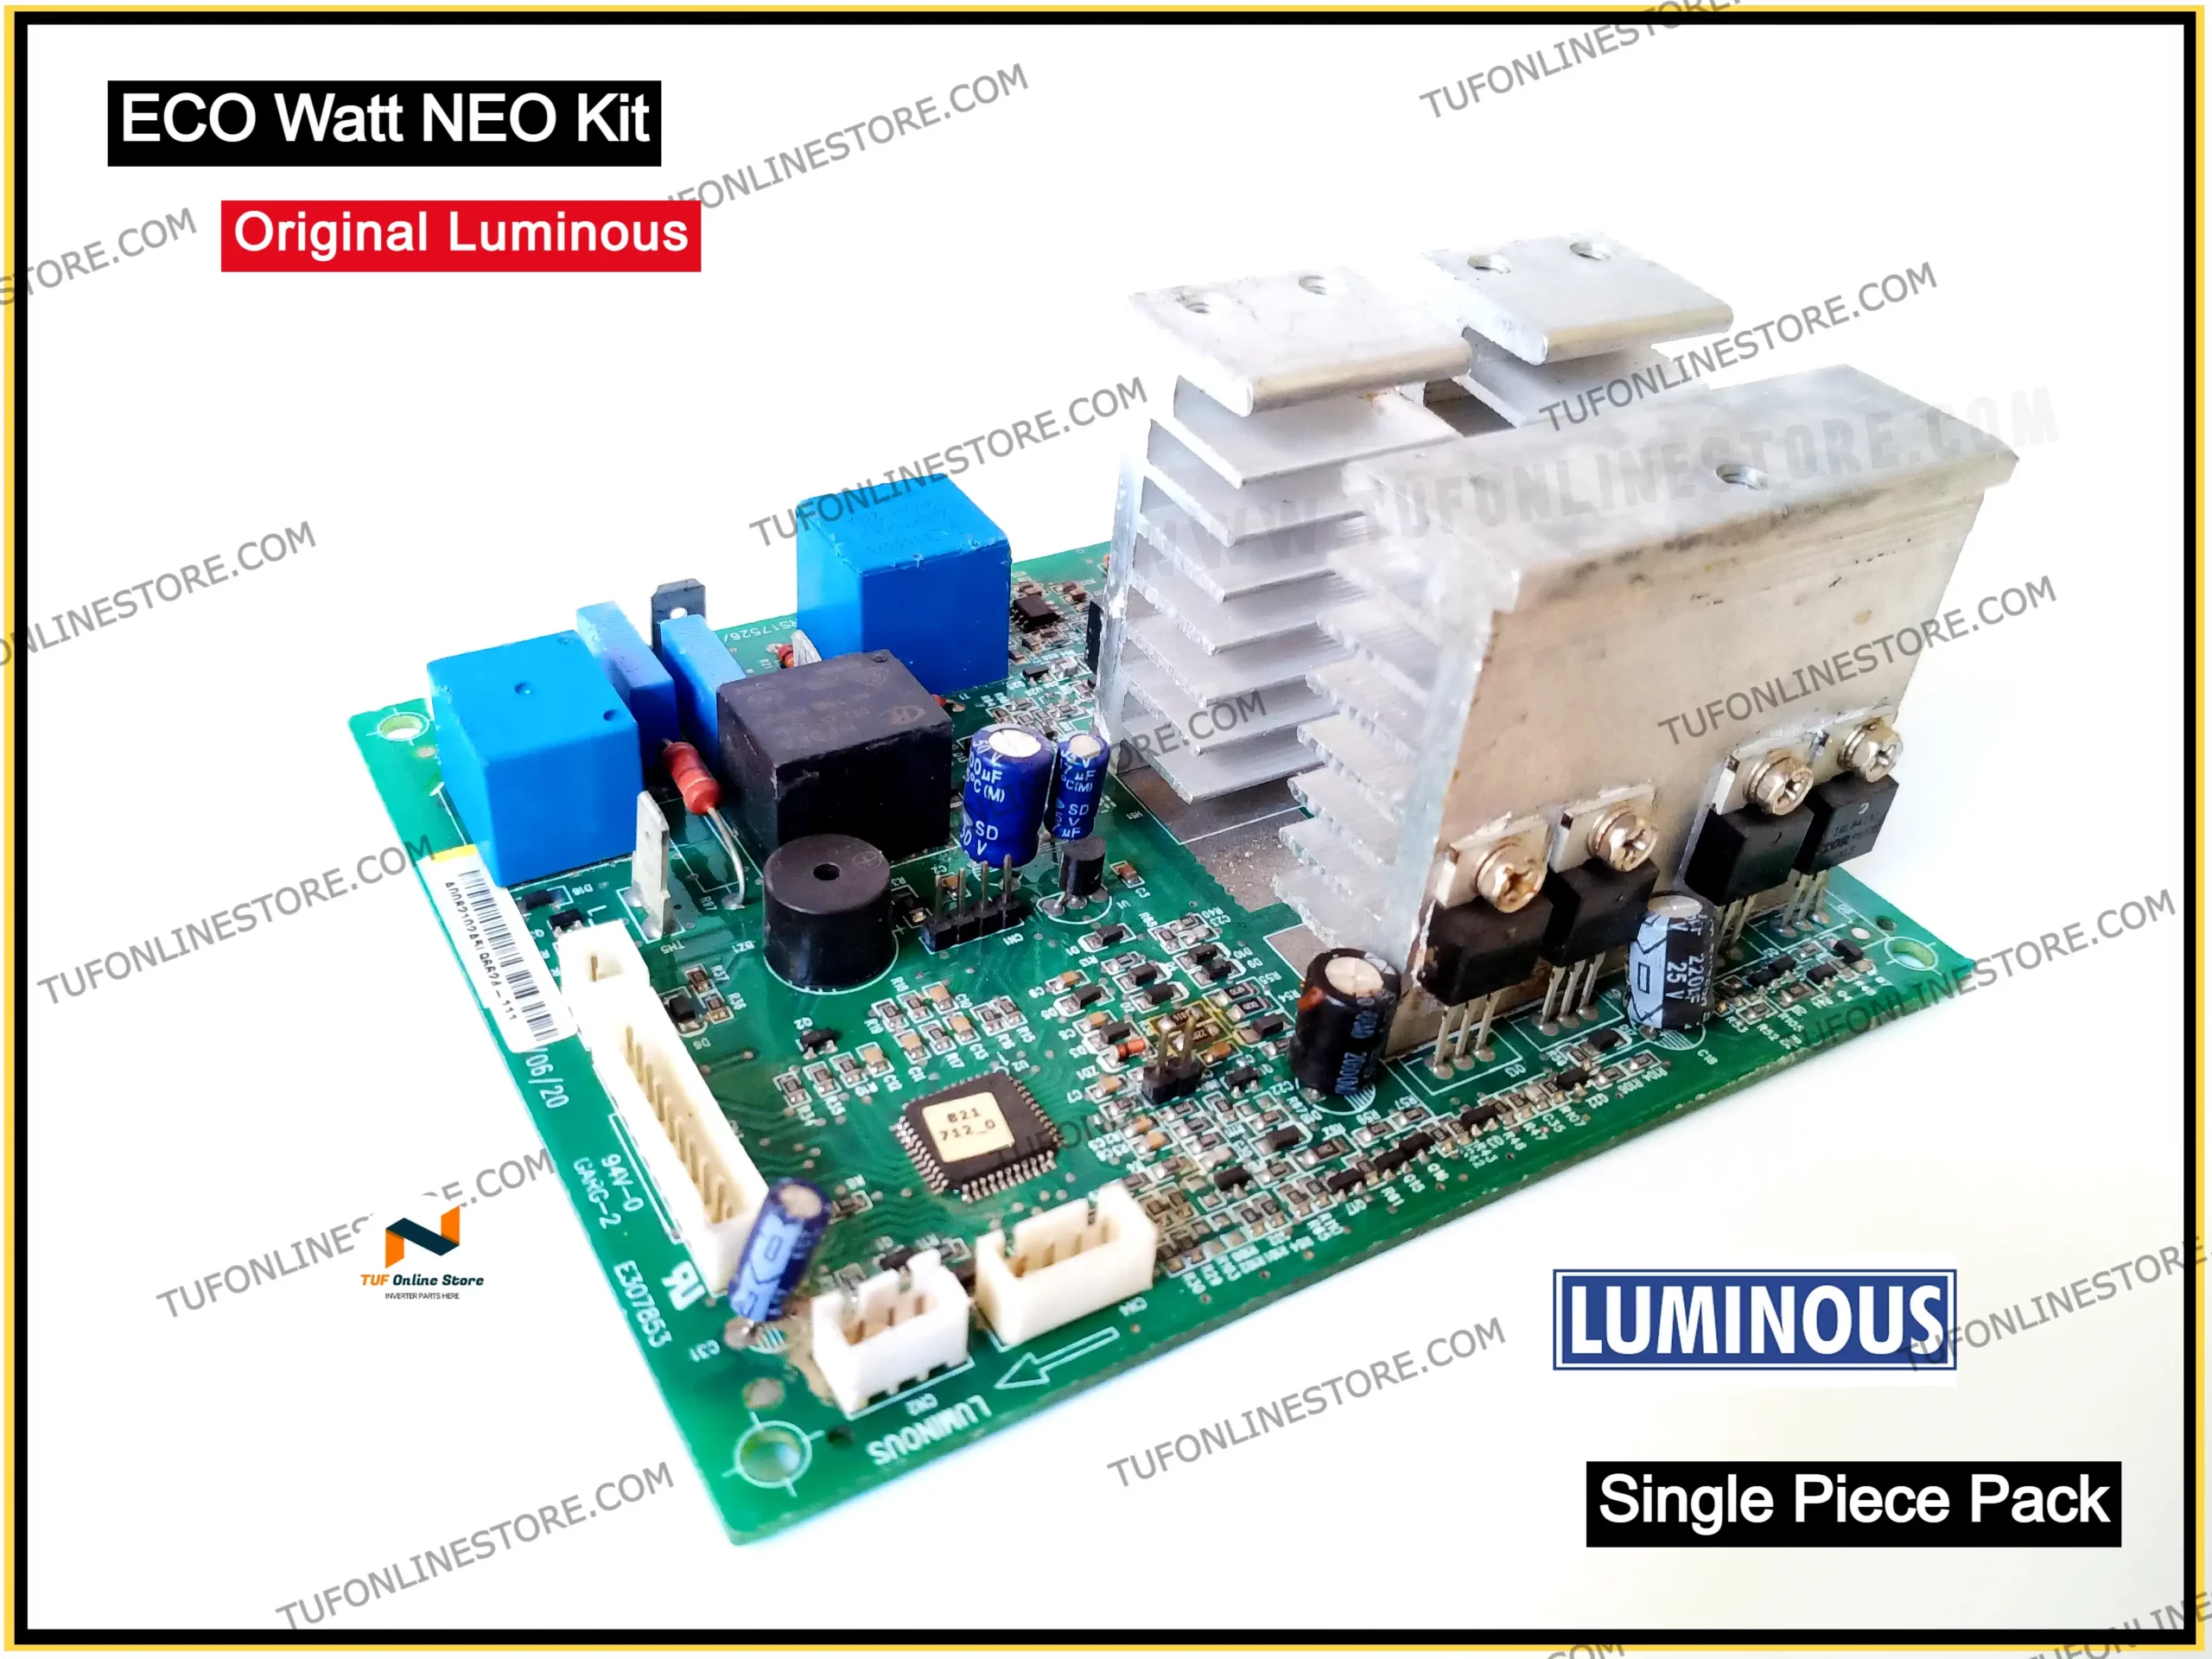 Luminous Eco Watt NEO 1050va || Model RD821-05 || Brand New Original  Inverter Kit